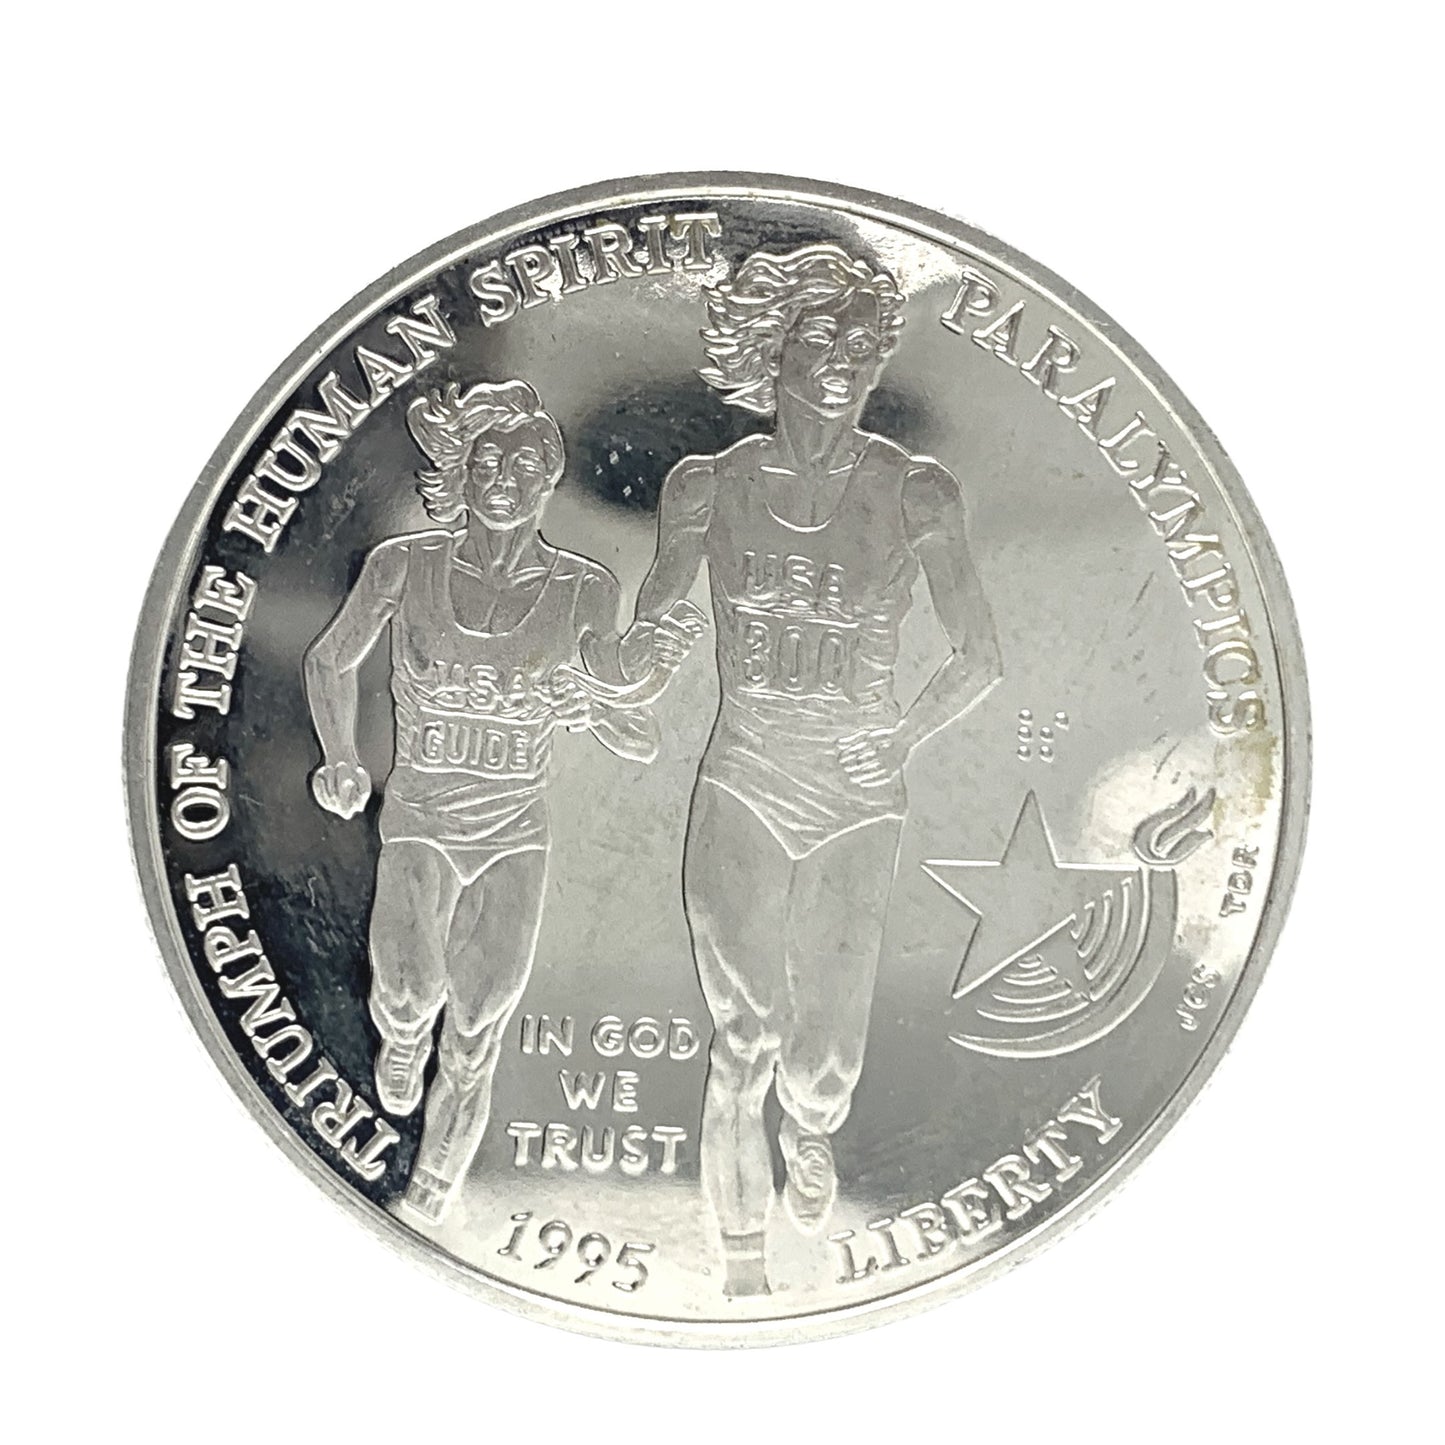 1995 Paralympics Proof Silver Dollar